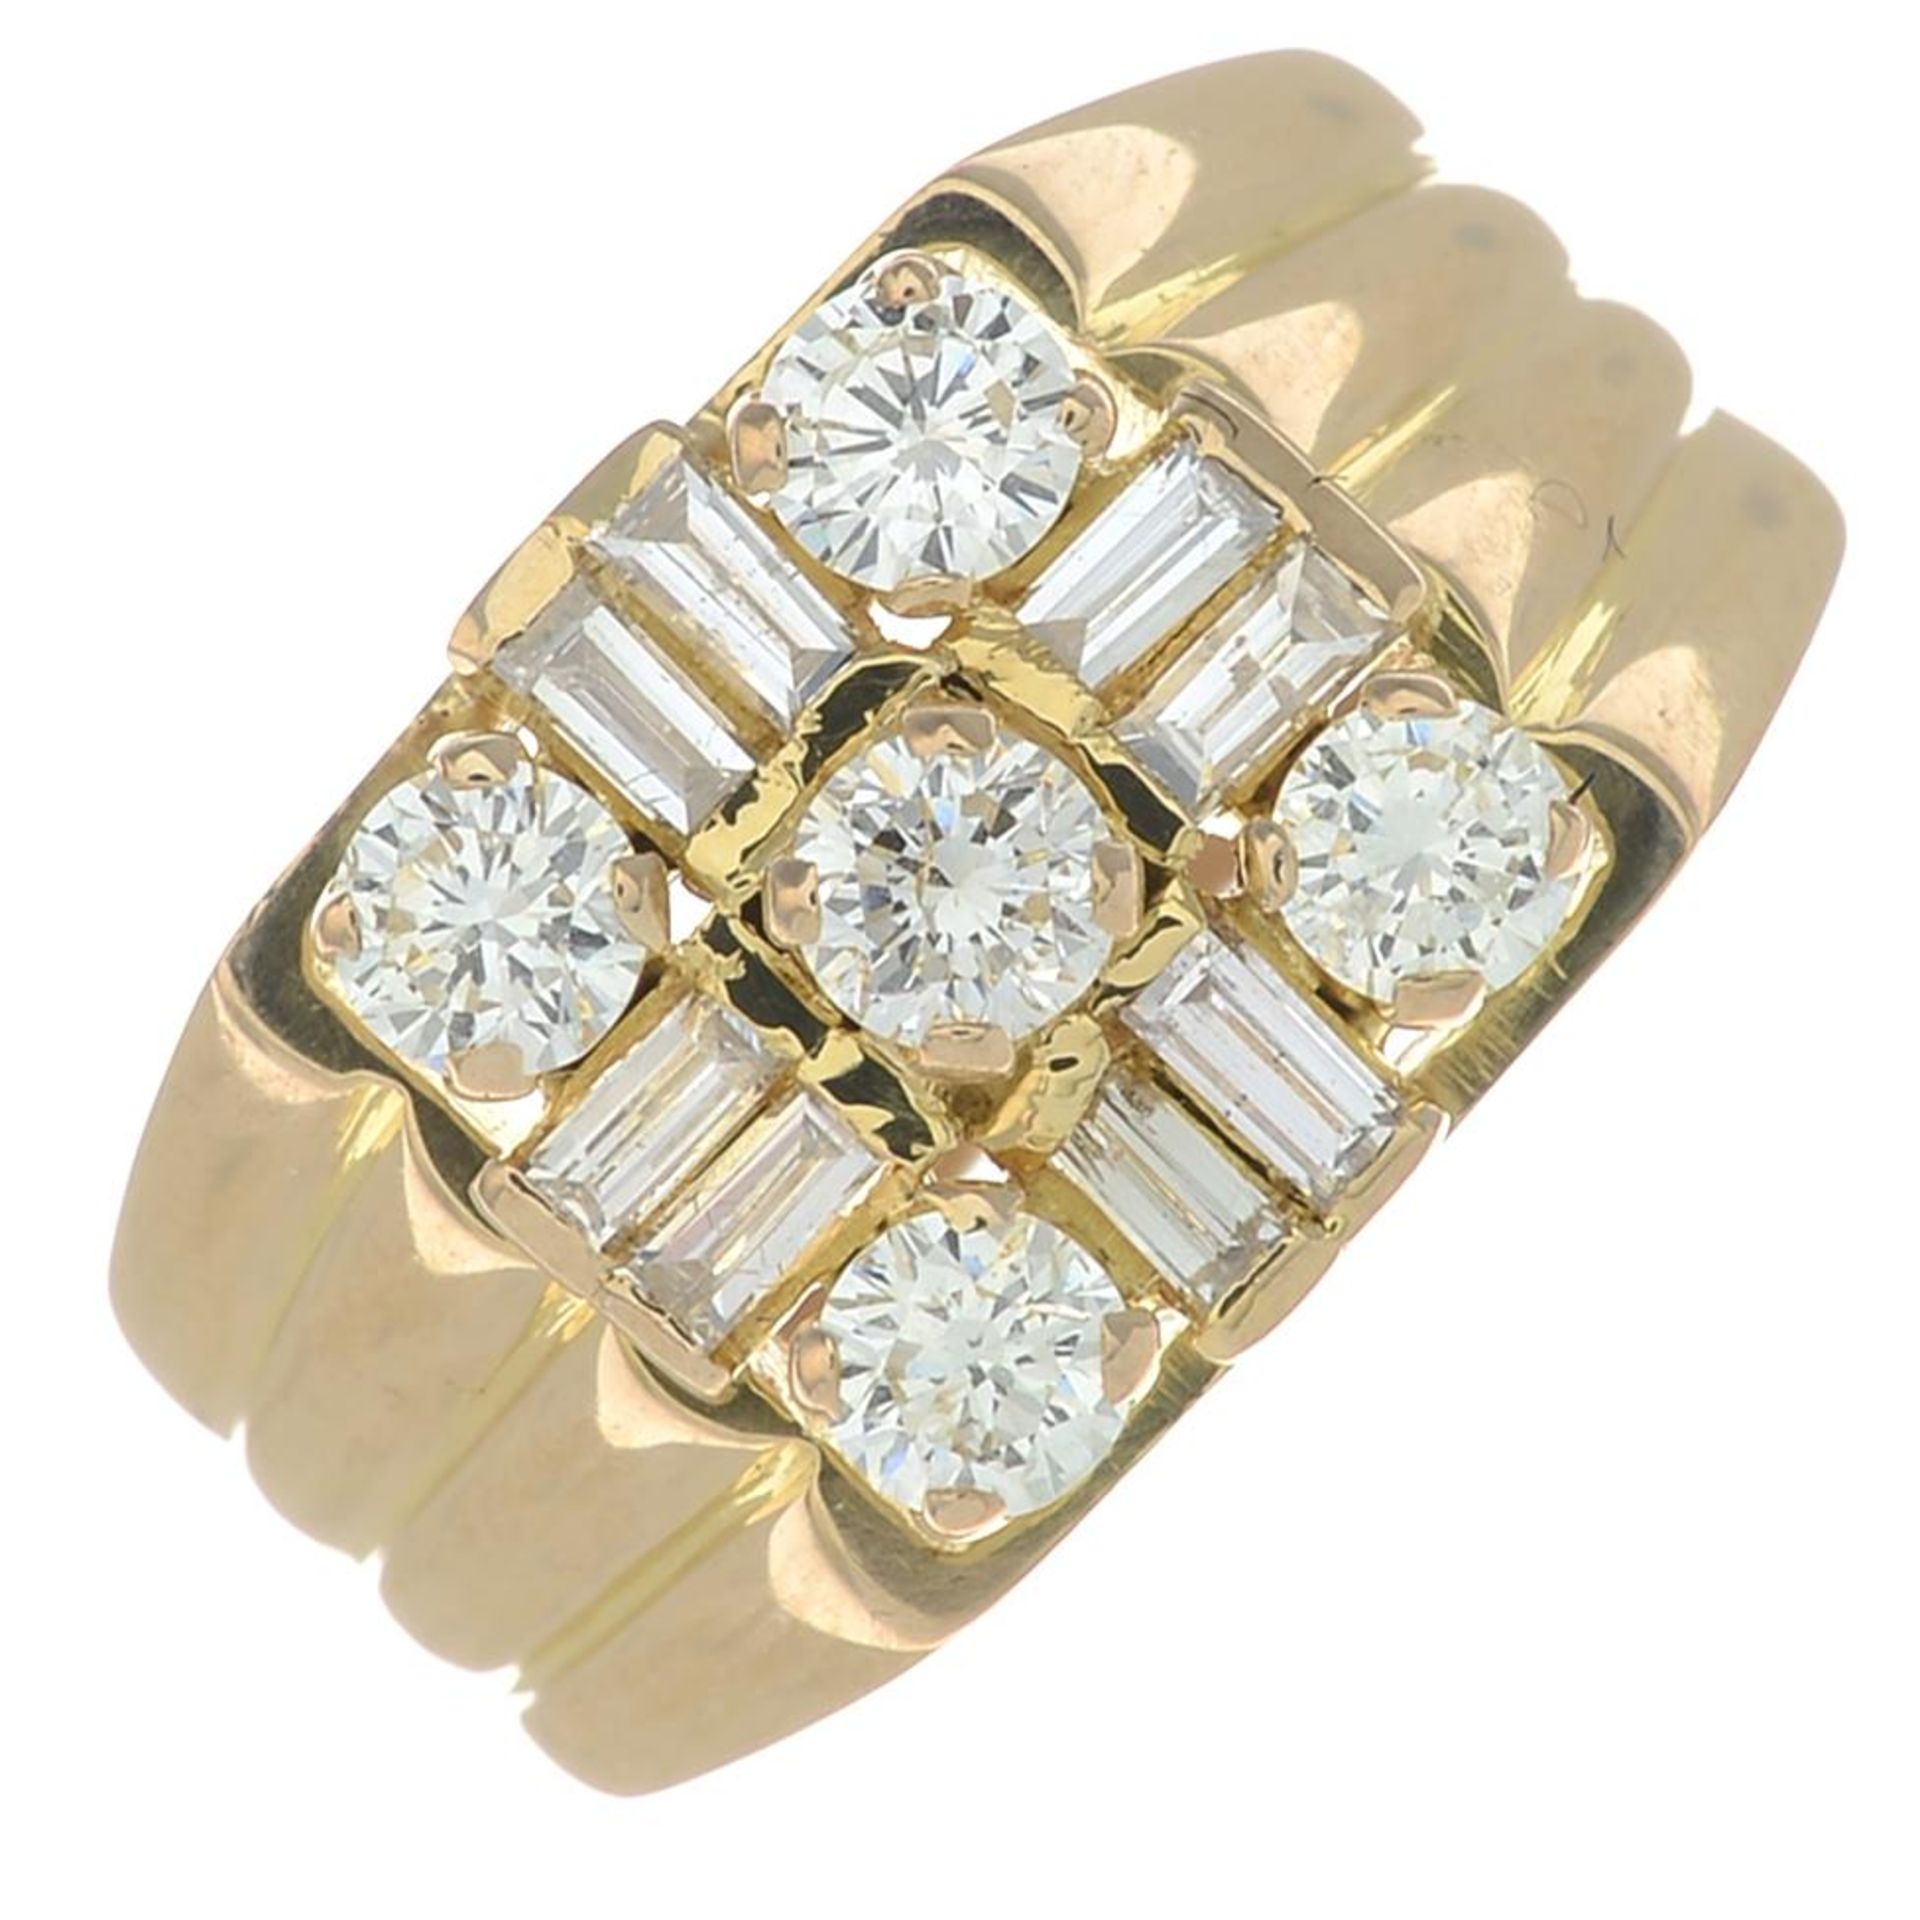 A 14ct gold vari-cut diamond dress ring.Estimated total diamond weight 1ct,